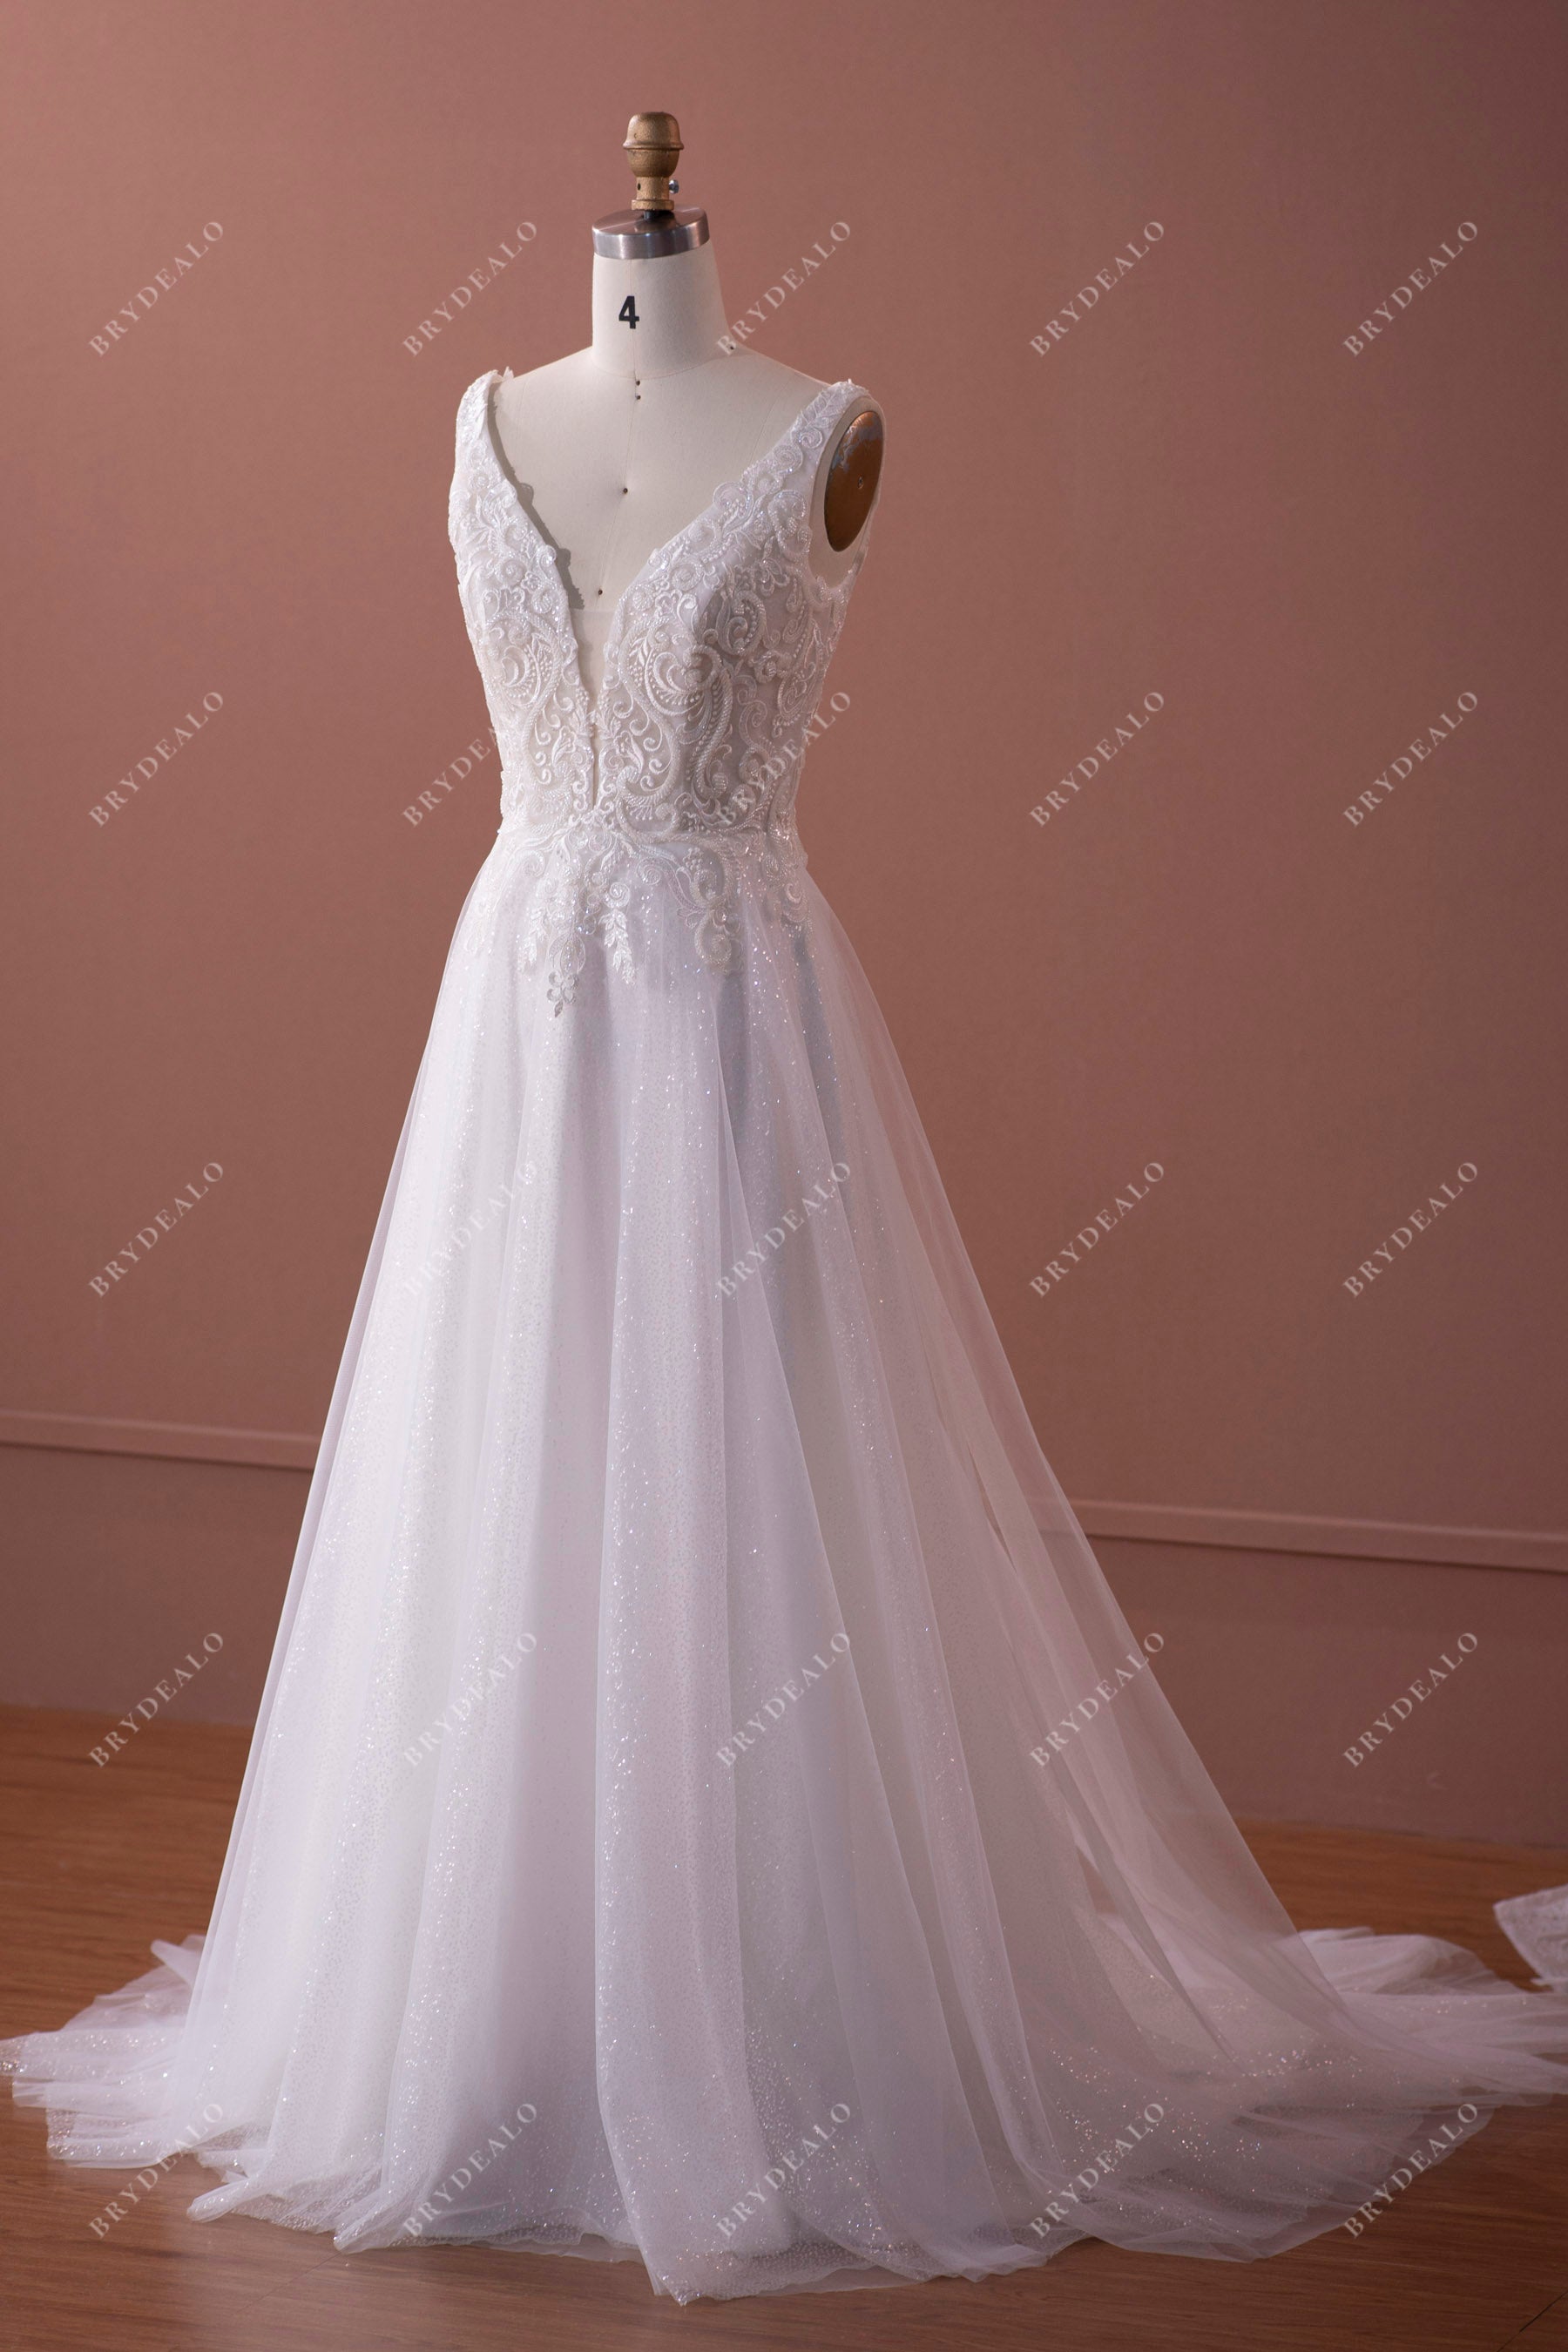 Sleeveless Beaded Lace Fall Wedding Dress